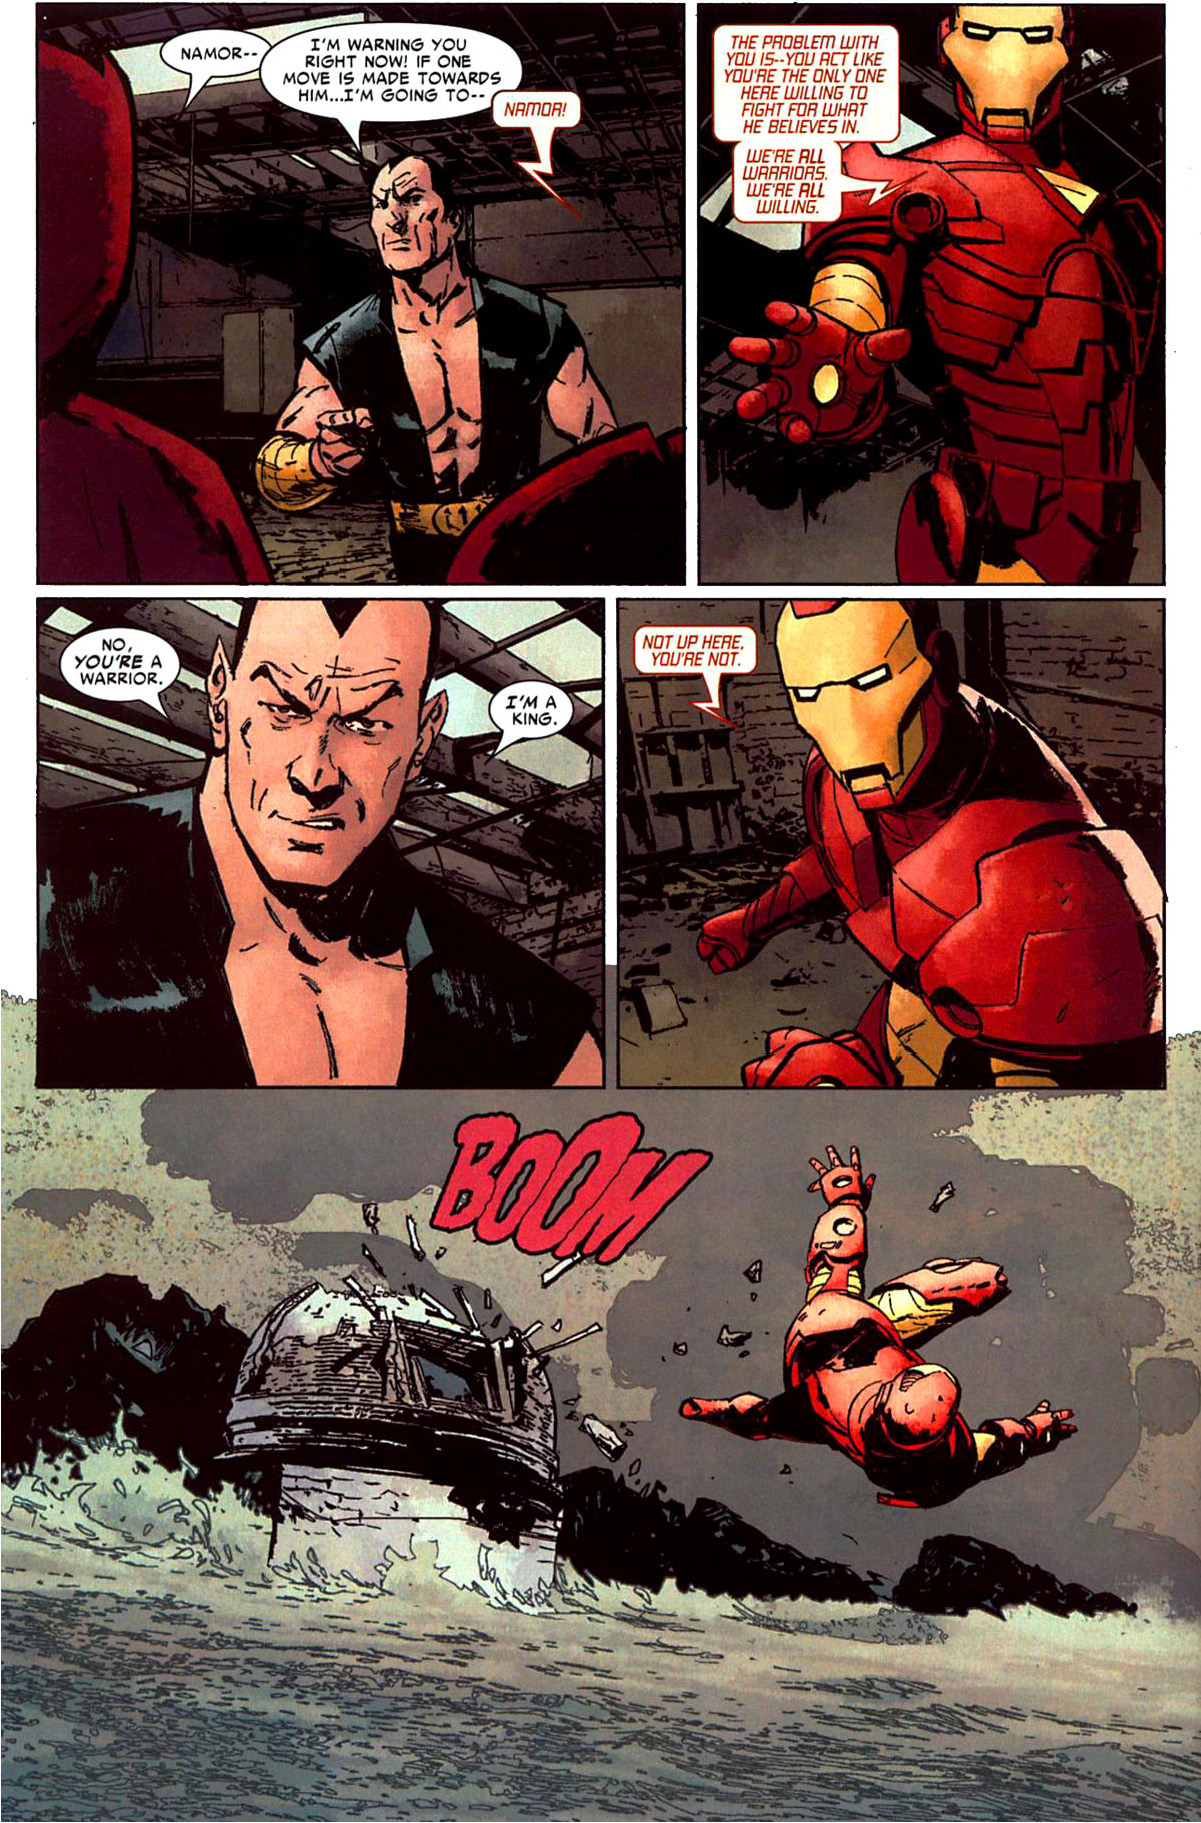 namor vs iron man